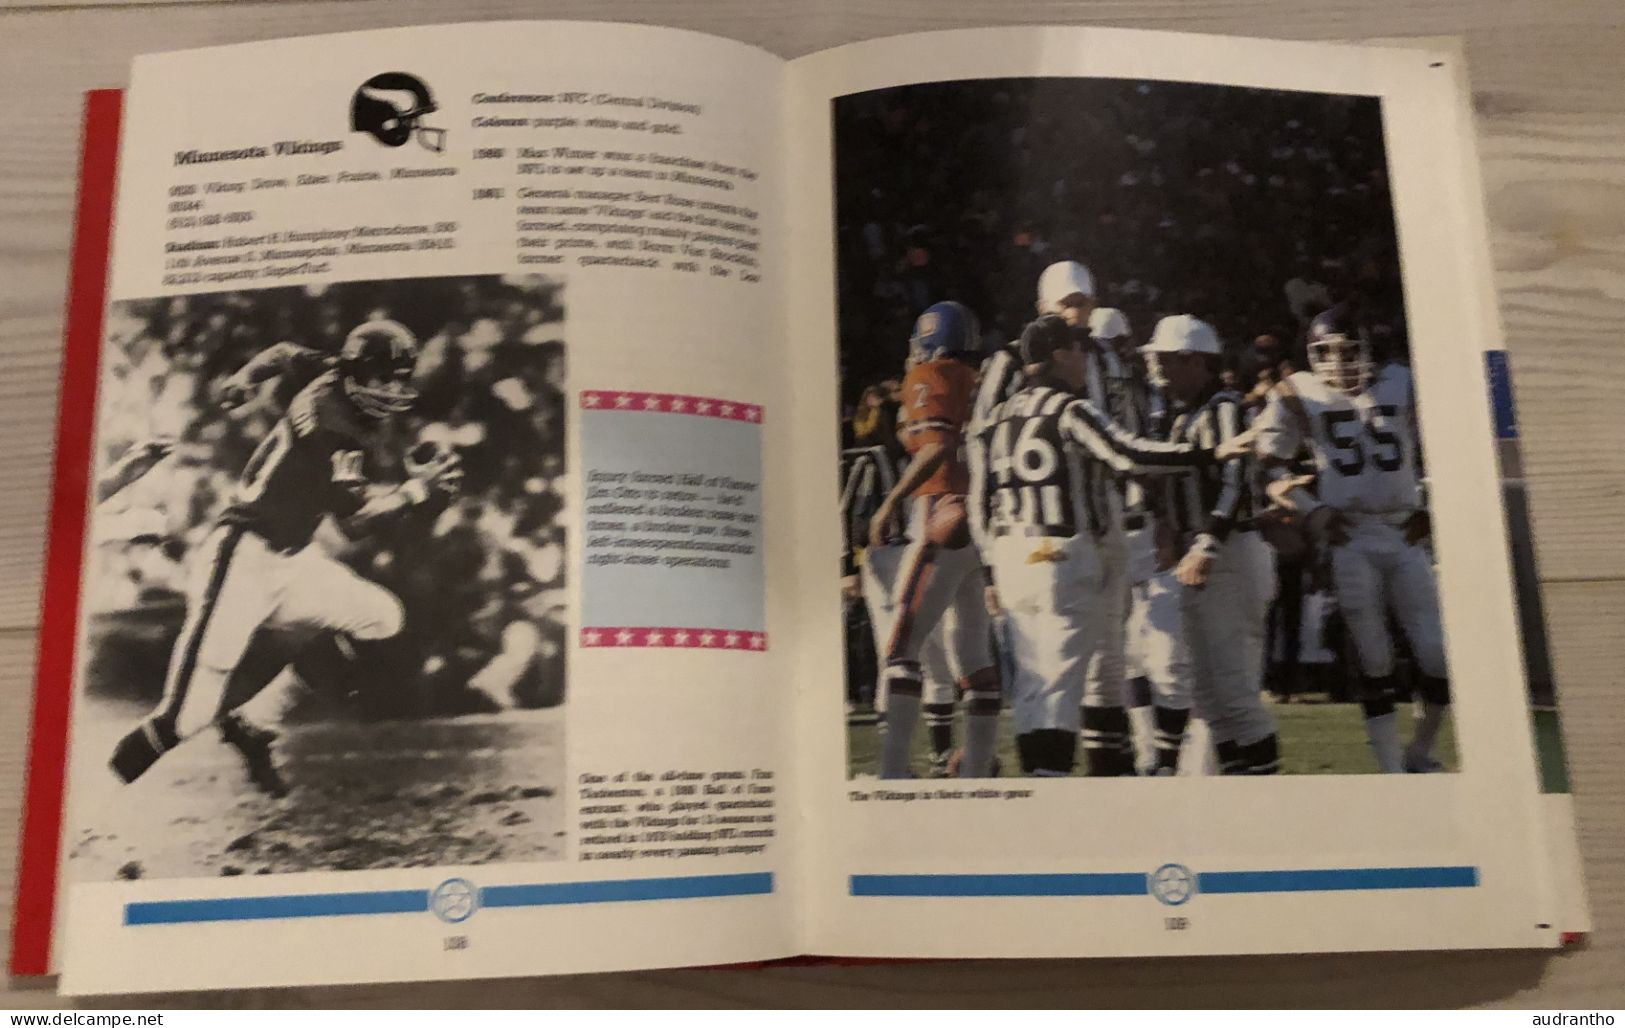 Livre Football Américain THE COMPLETE AMERICAN FOOTBALL BOOK Nicky Horne Paul MacCartney 1986 - 1950-Now